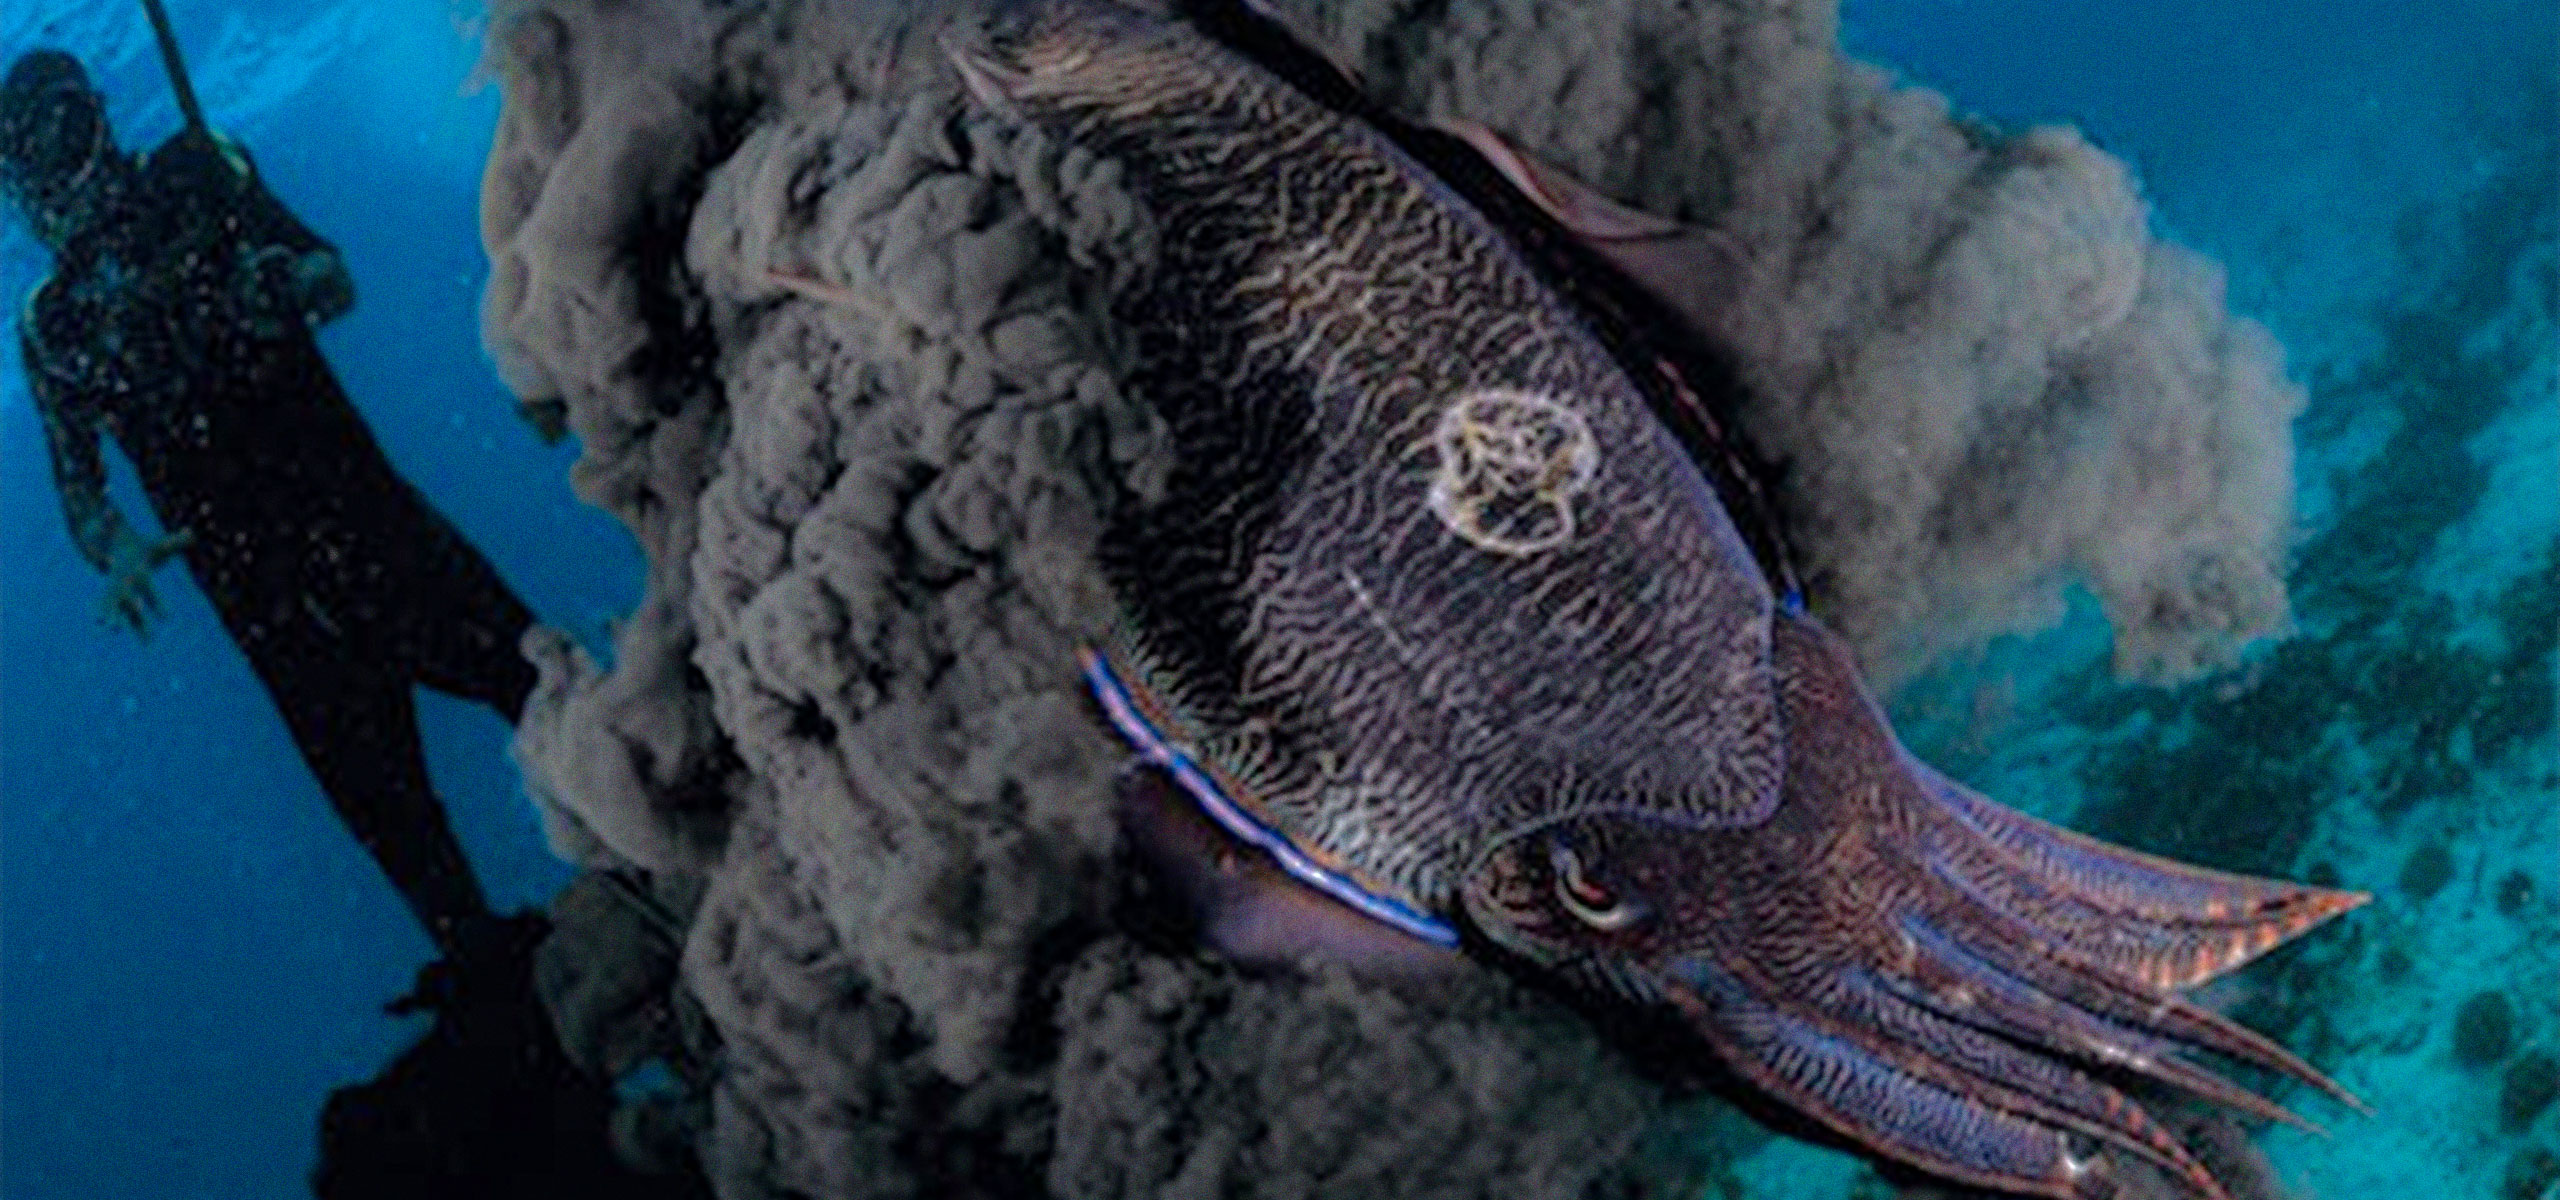 An underwater image of an inking cuttlefish. Photo courtesy of Aquarobotman.com.